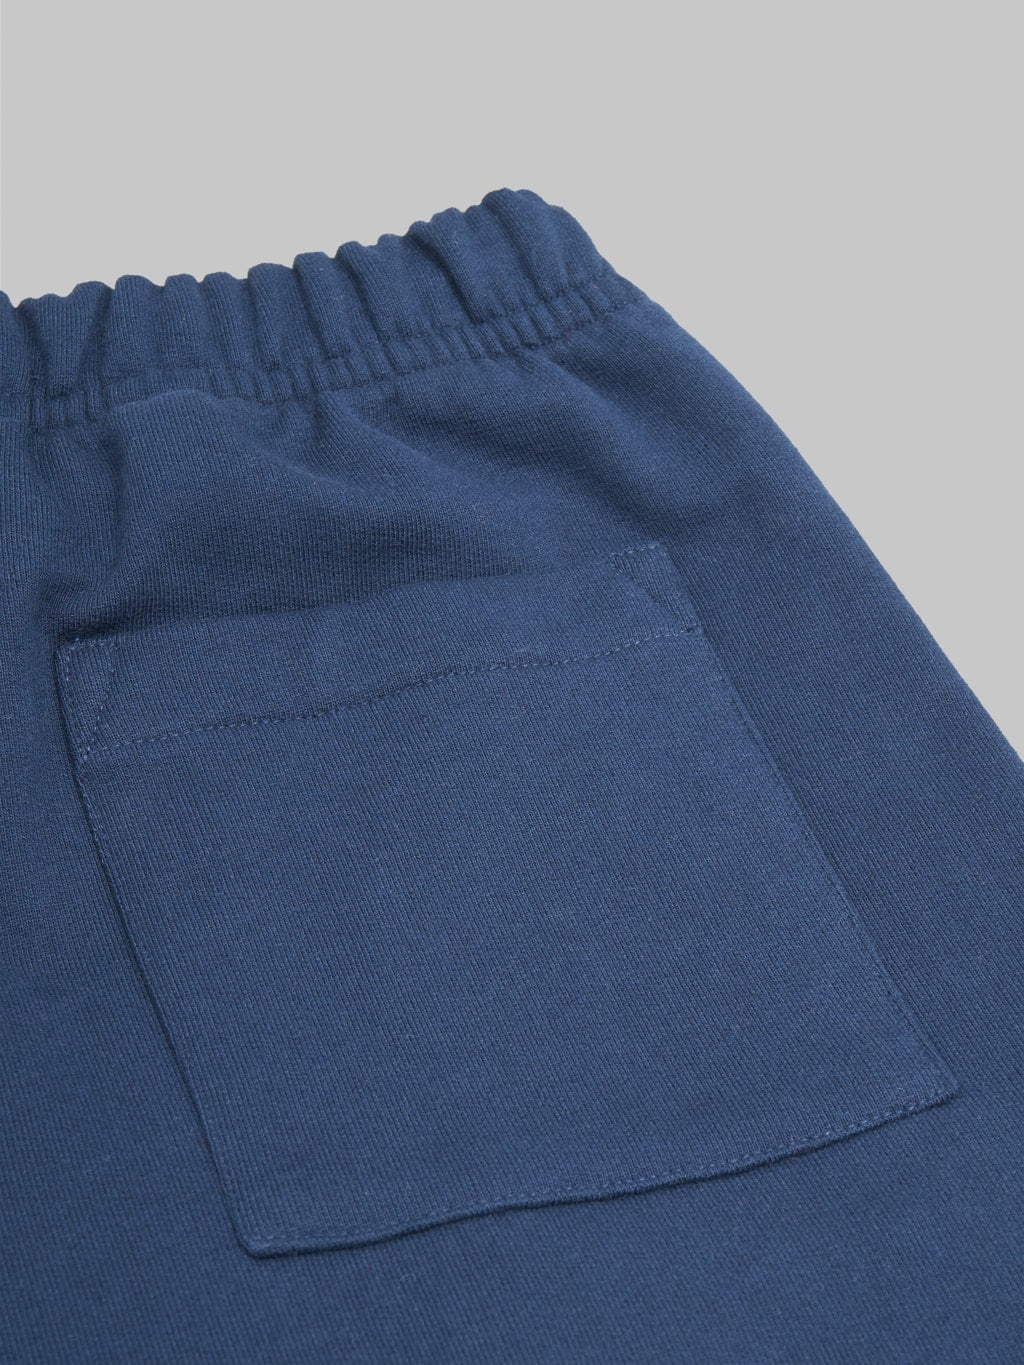 Merz b. Schwanen 356 12oz Loopwheeled Classic Fit Sweat Shorts Ink Blue